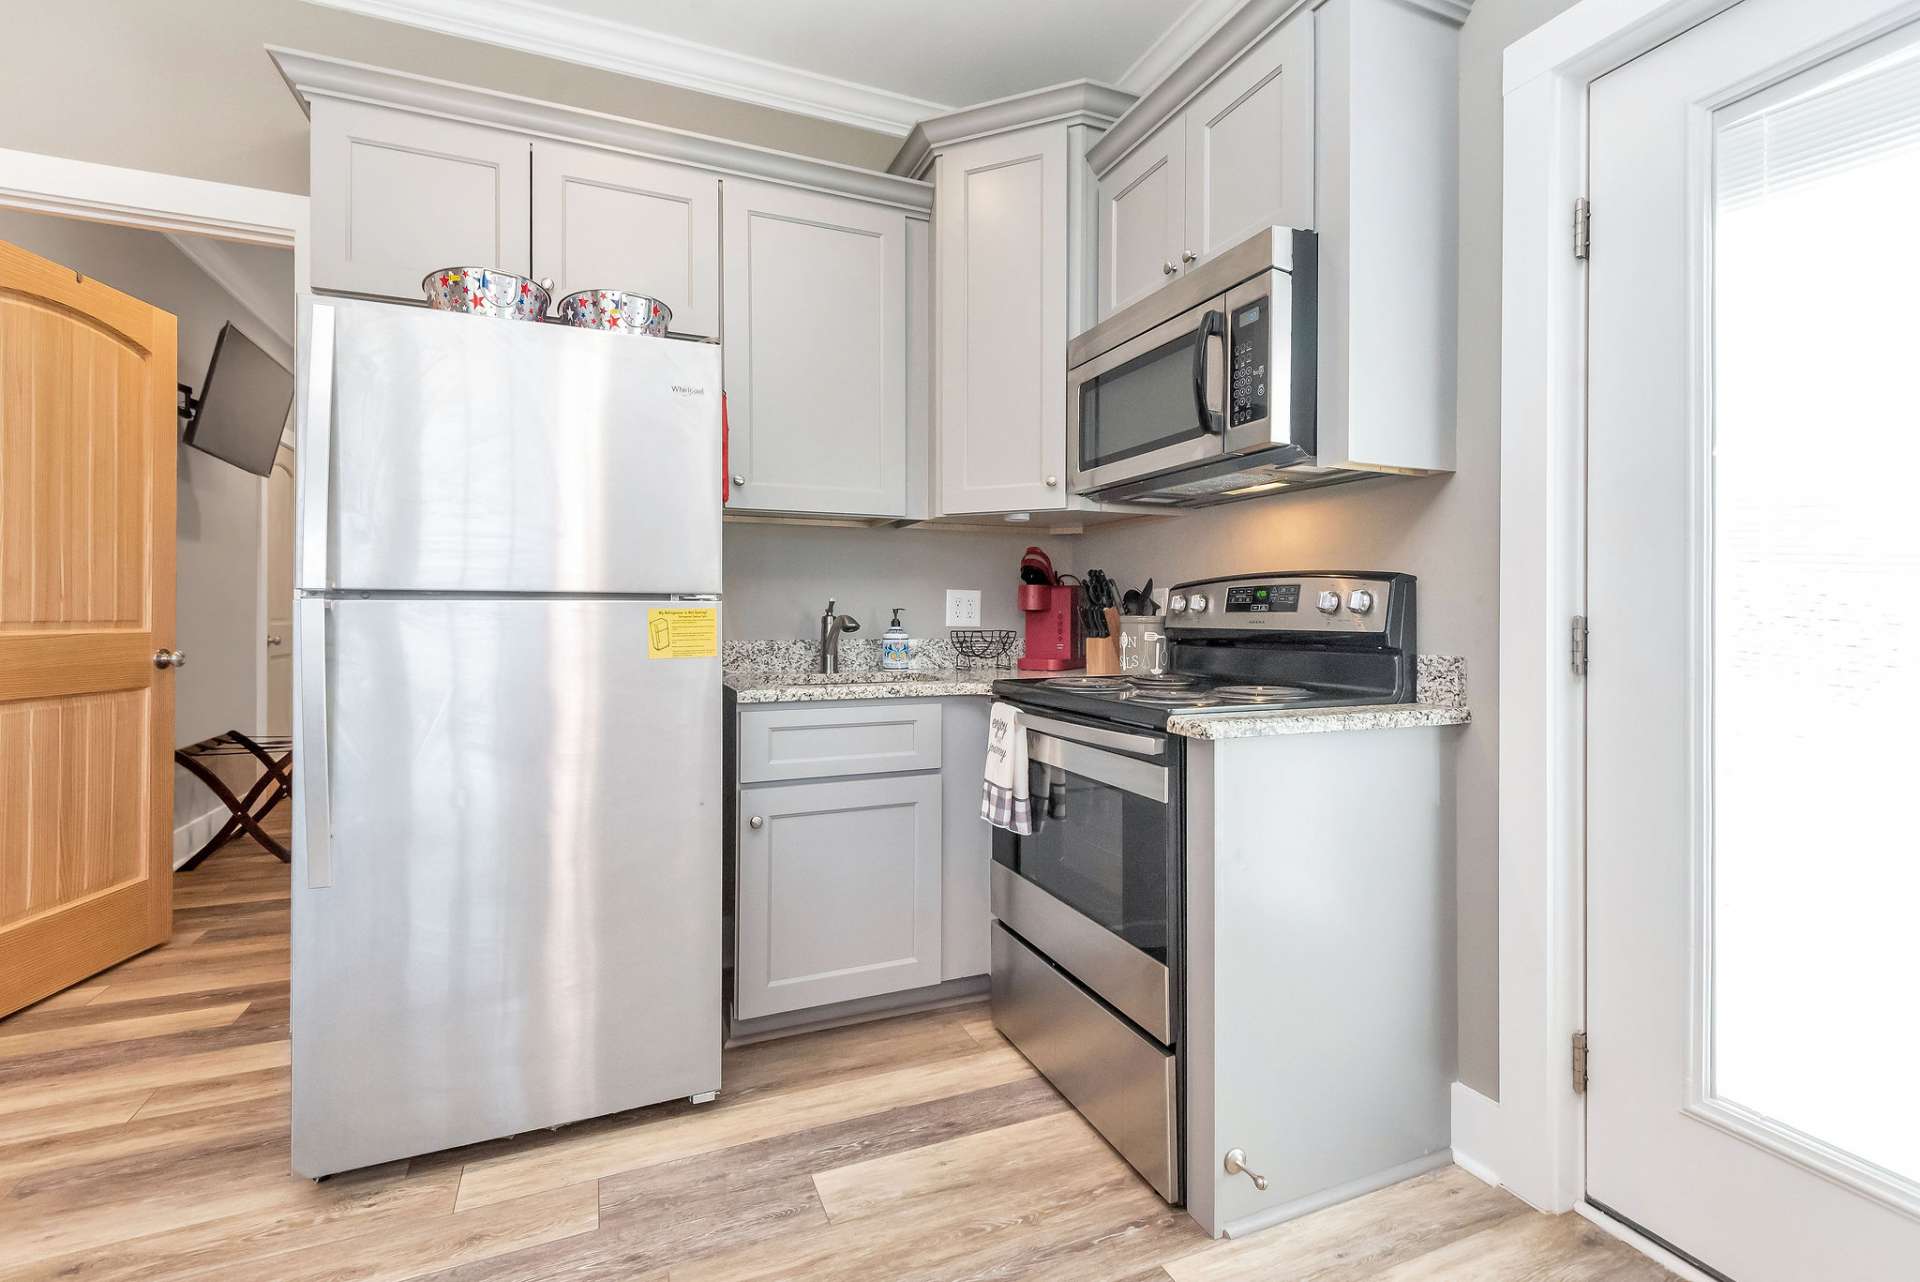 Kitchens offer full-size appliances.